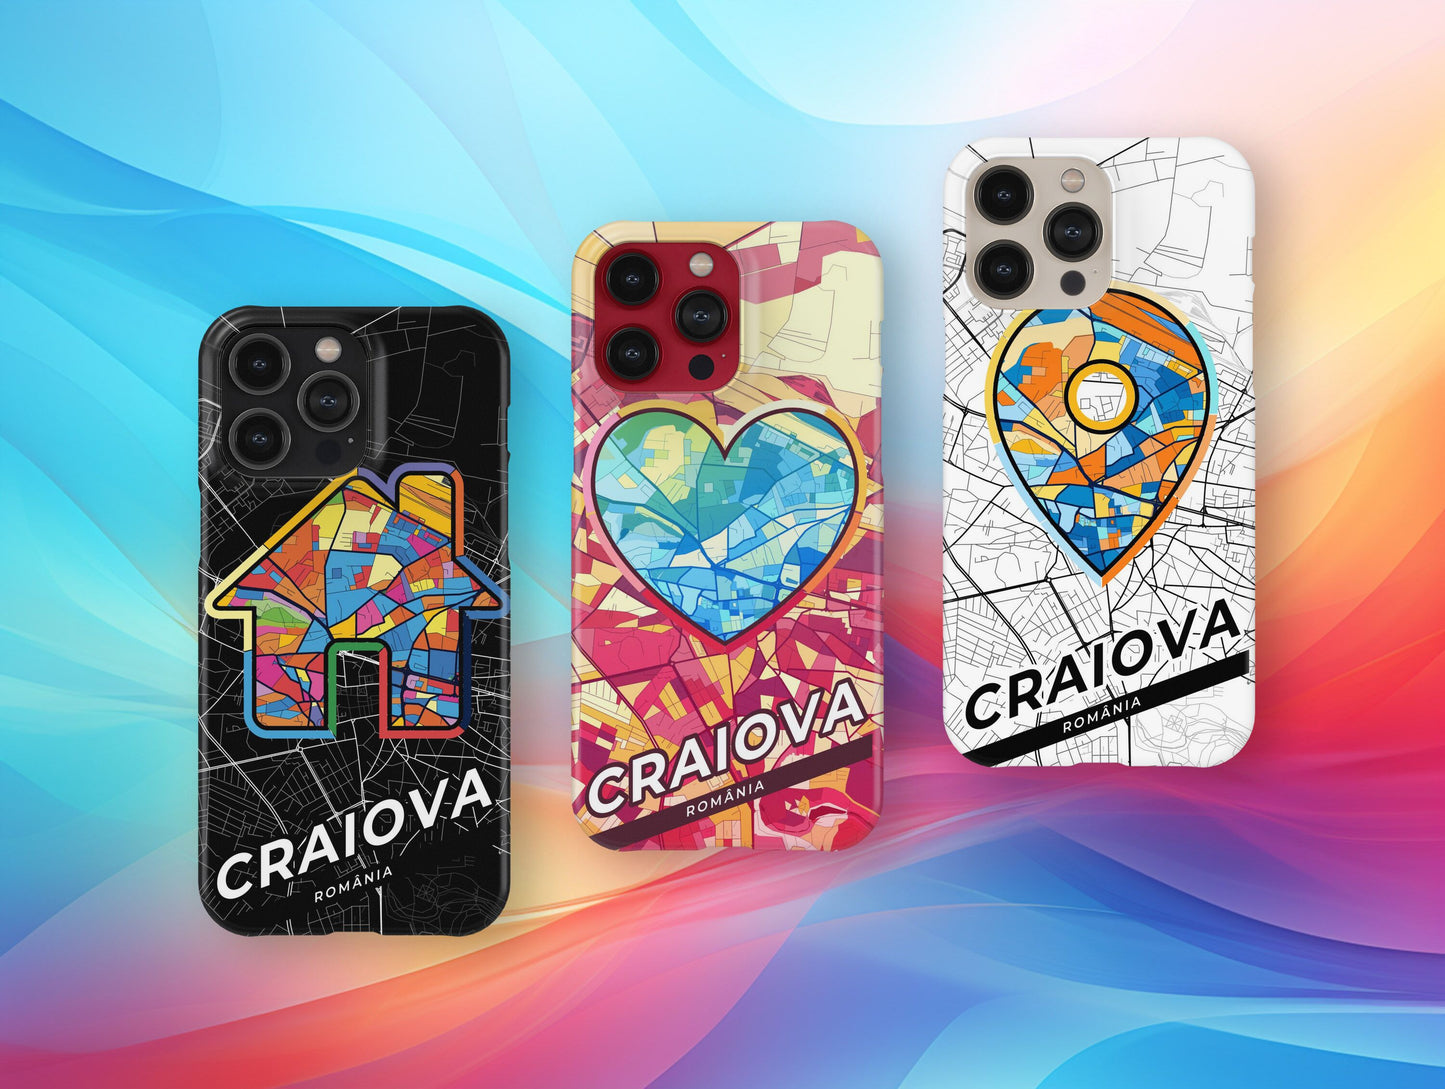 Craiova Romania slim phone case with colorful icon. Birthday, wedding or housewarming gift. Couple match cases.